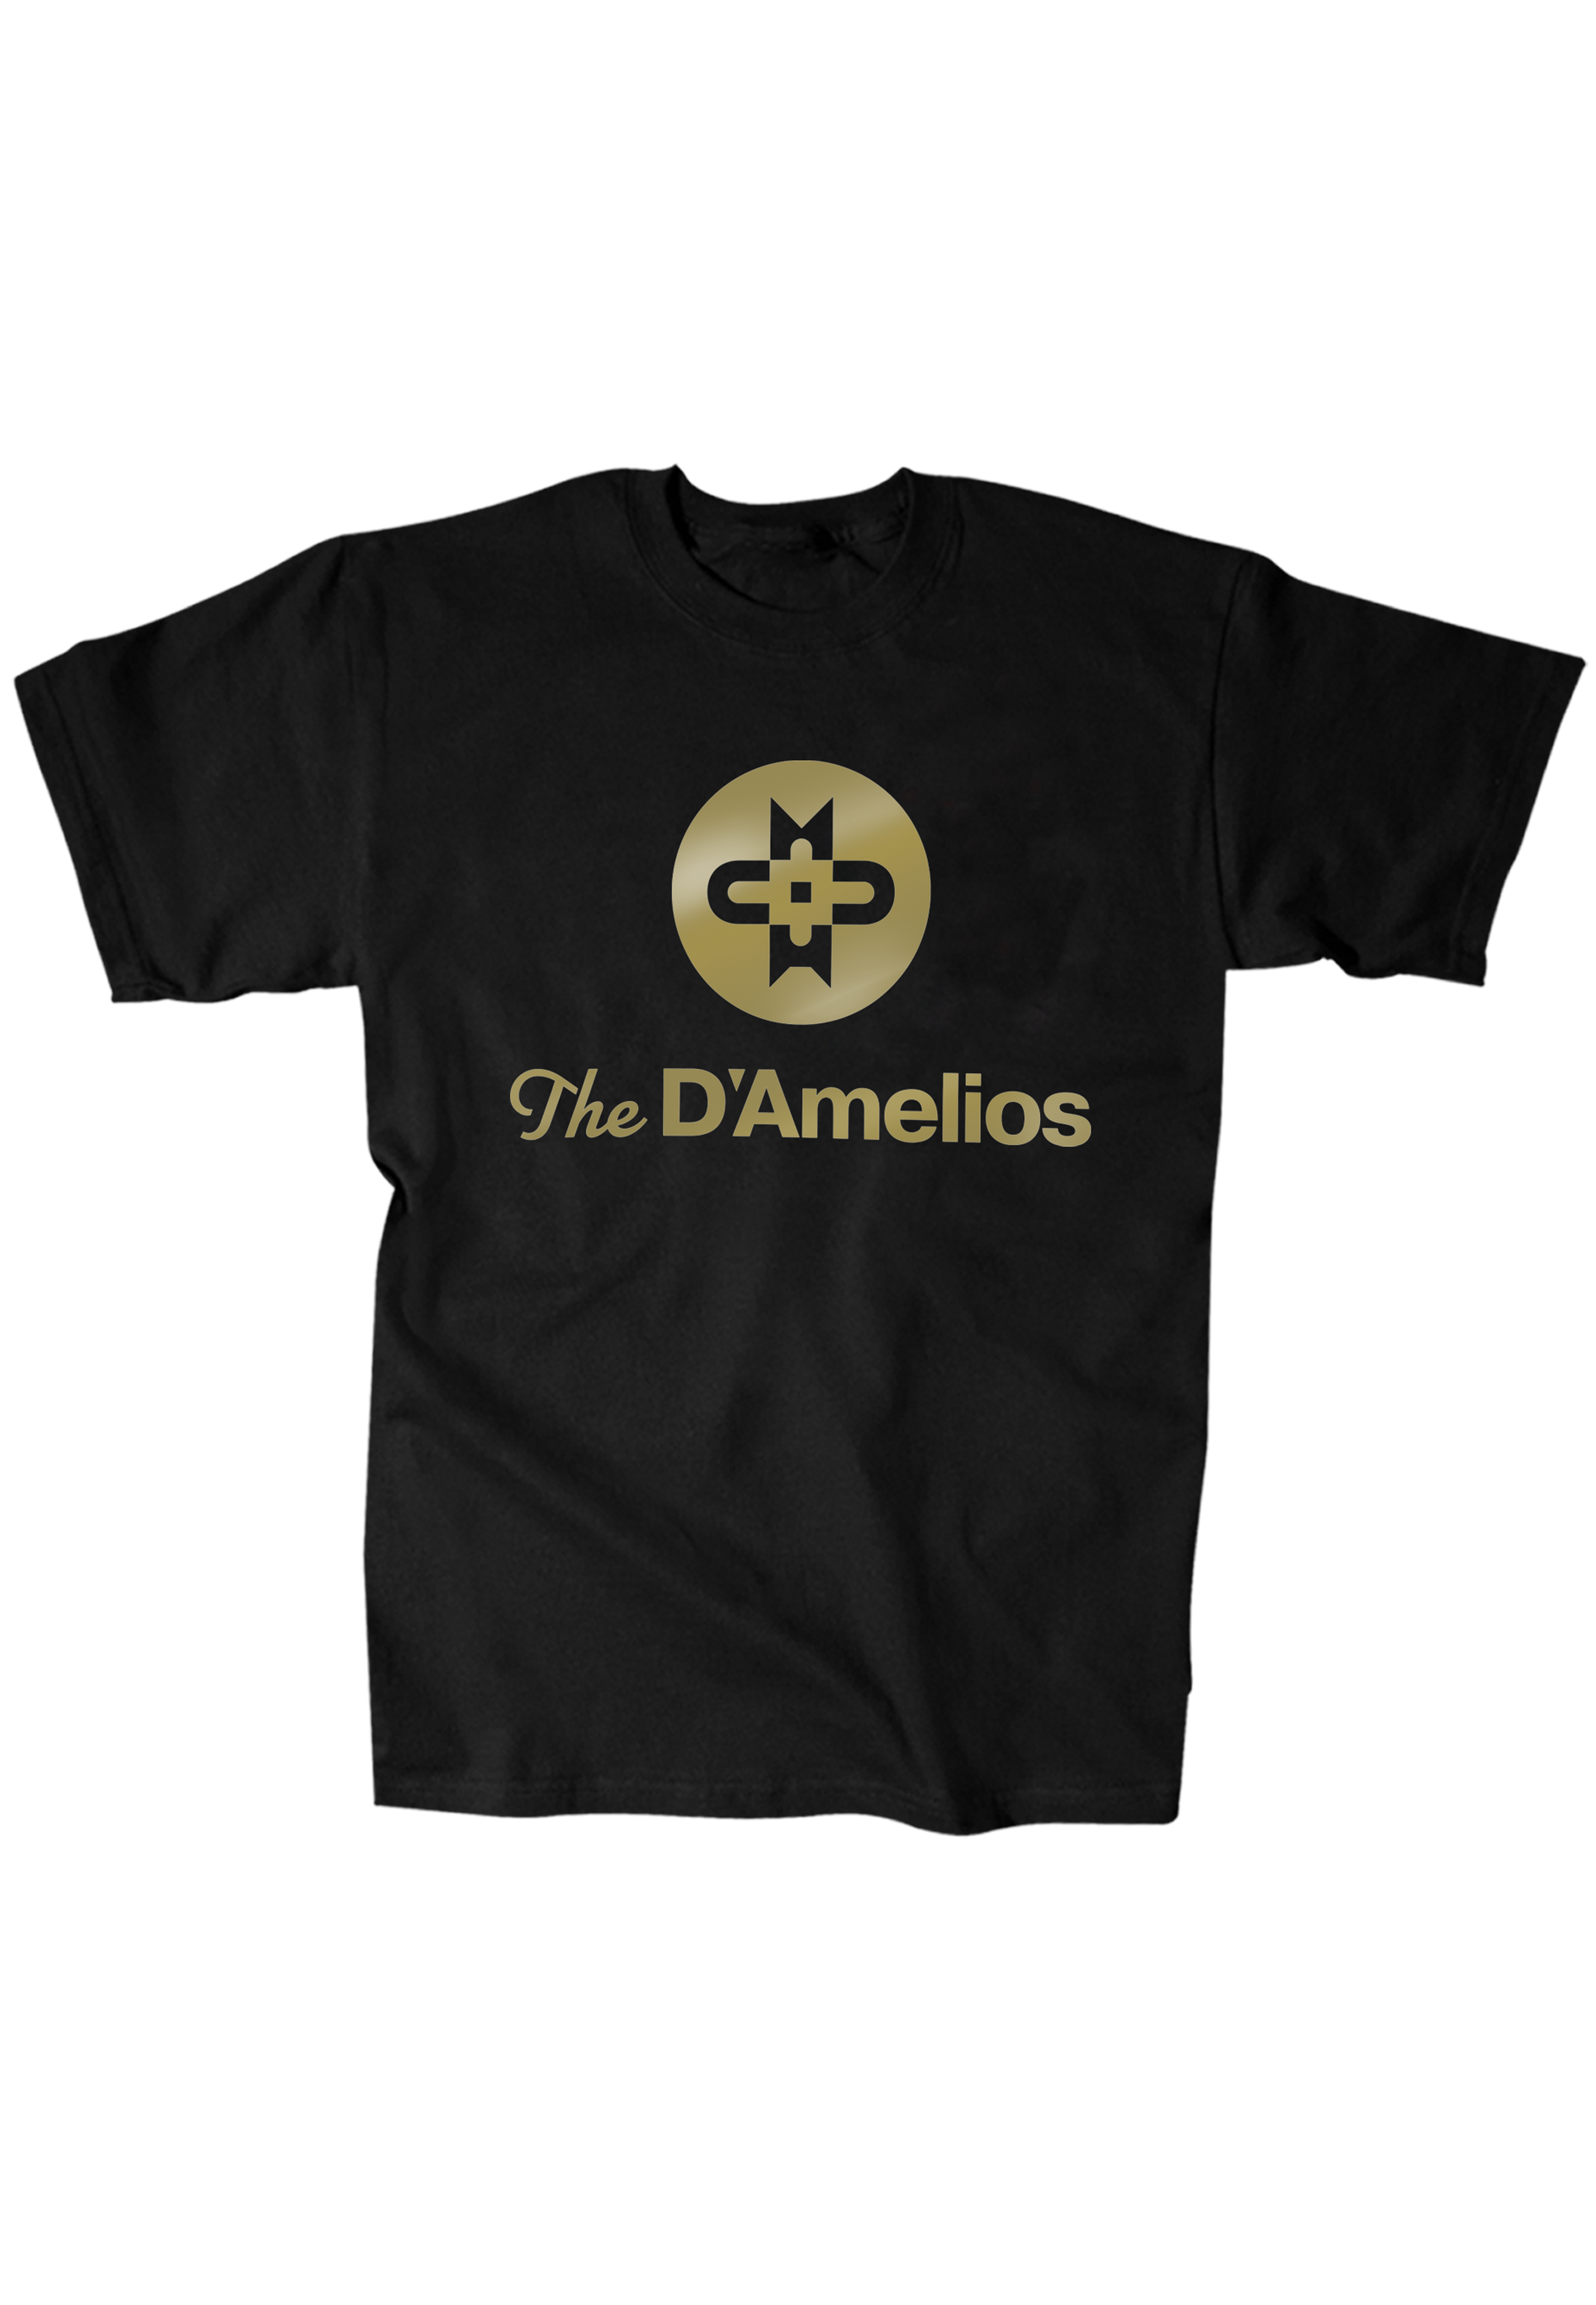 The D'Amelio Family | Dam Fam Logo Tee in Black with Metallic Text